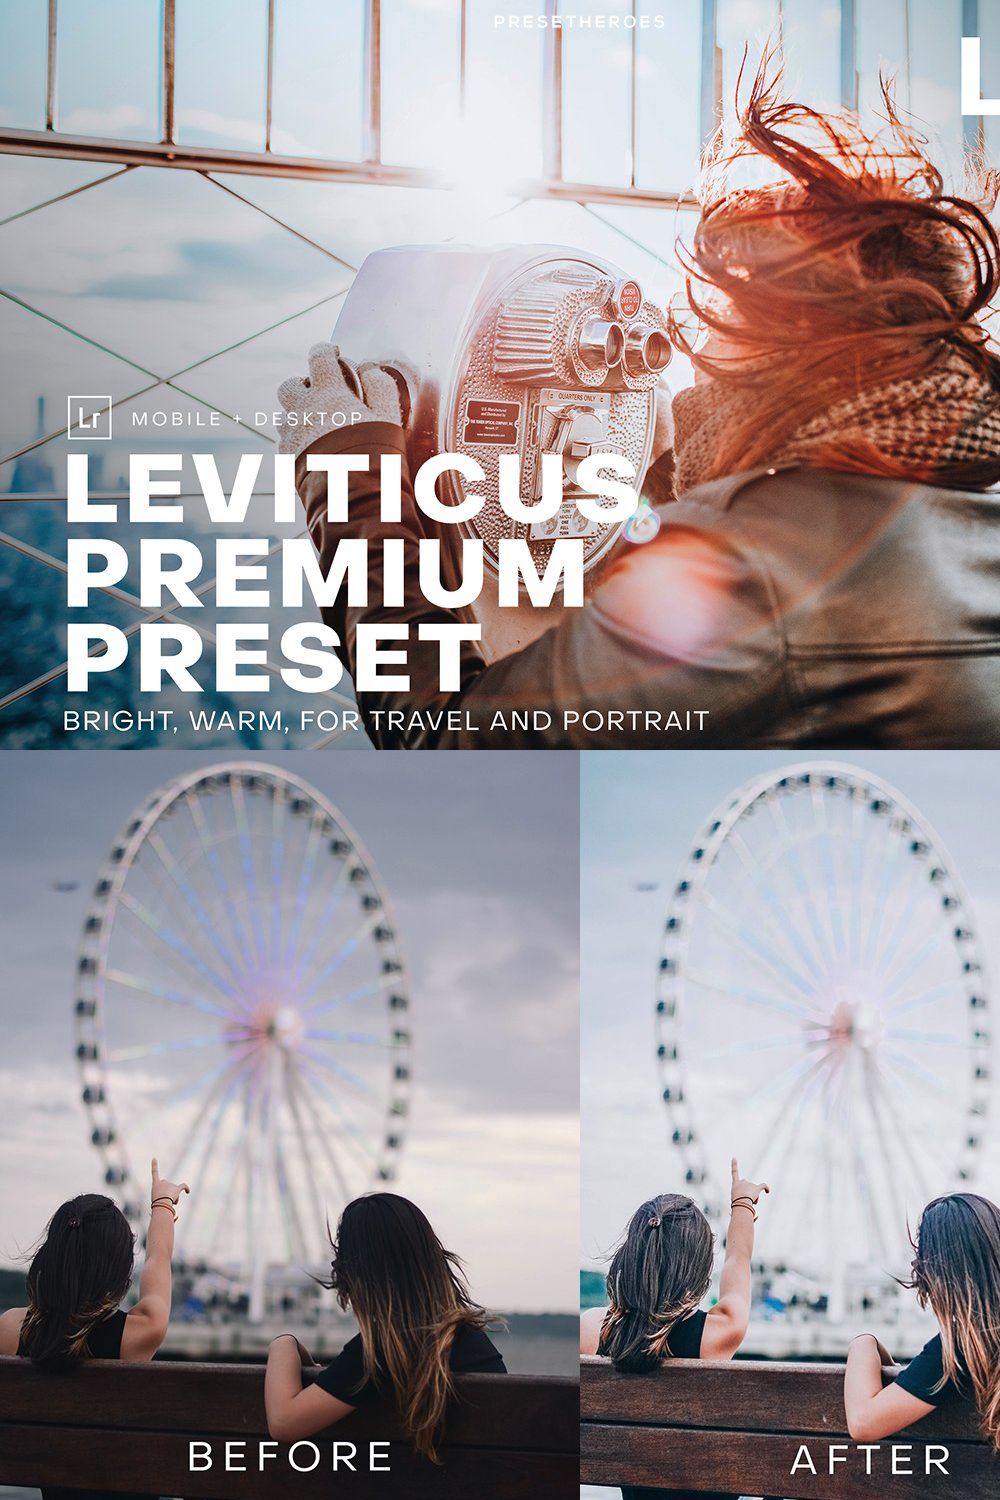 LEVITICUS High Quality Premium Light pinterest preview image.